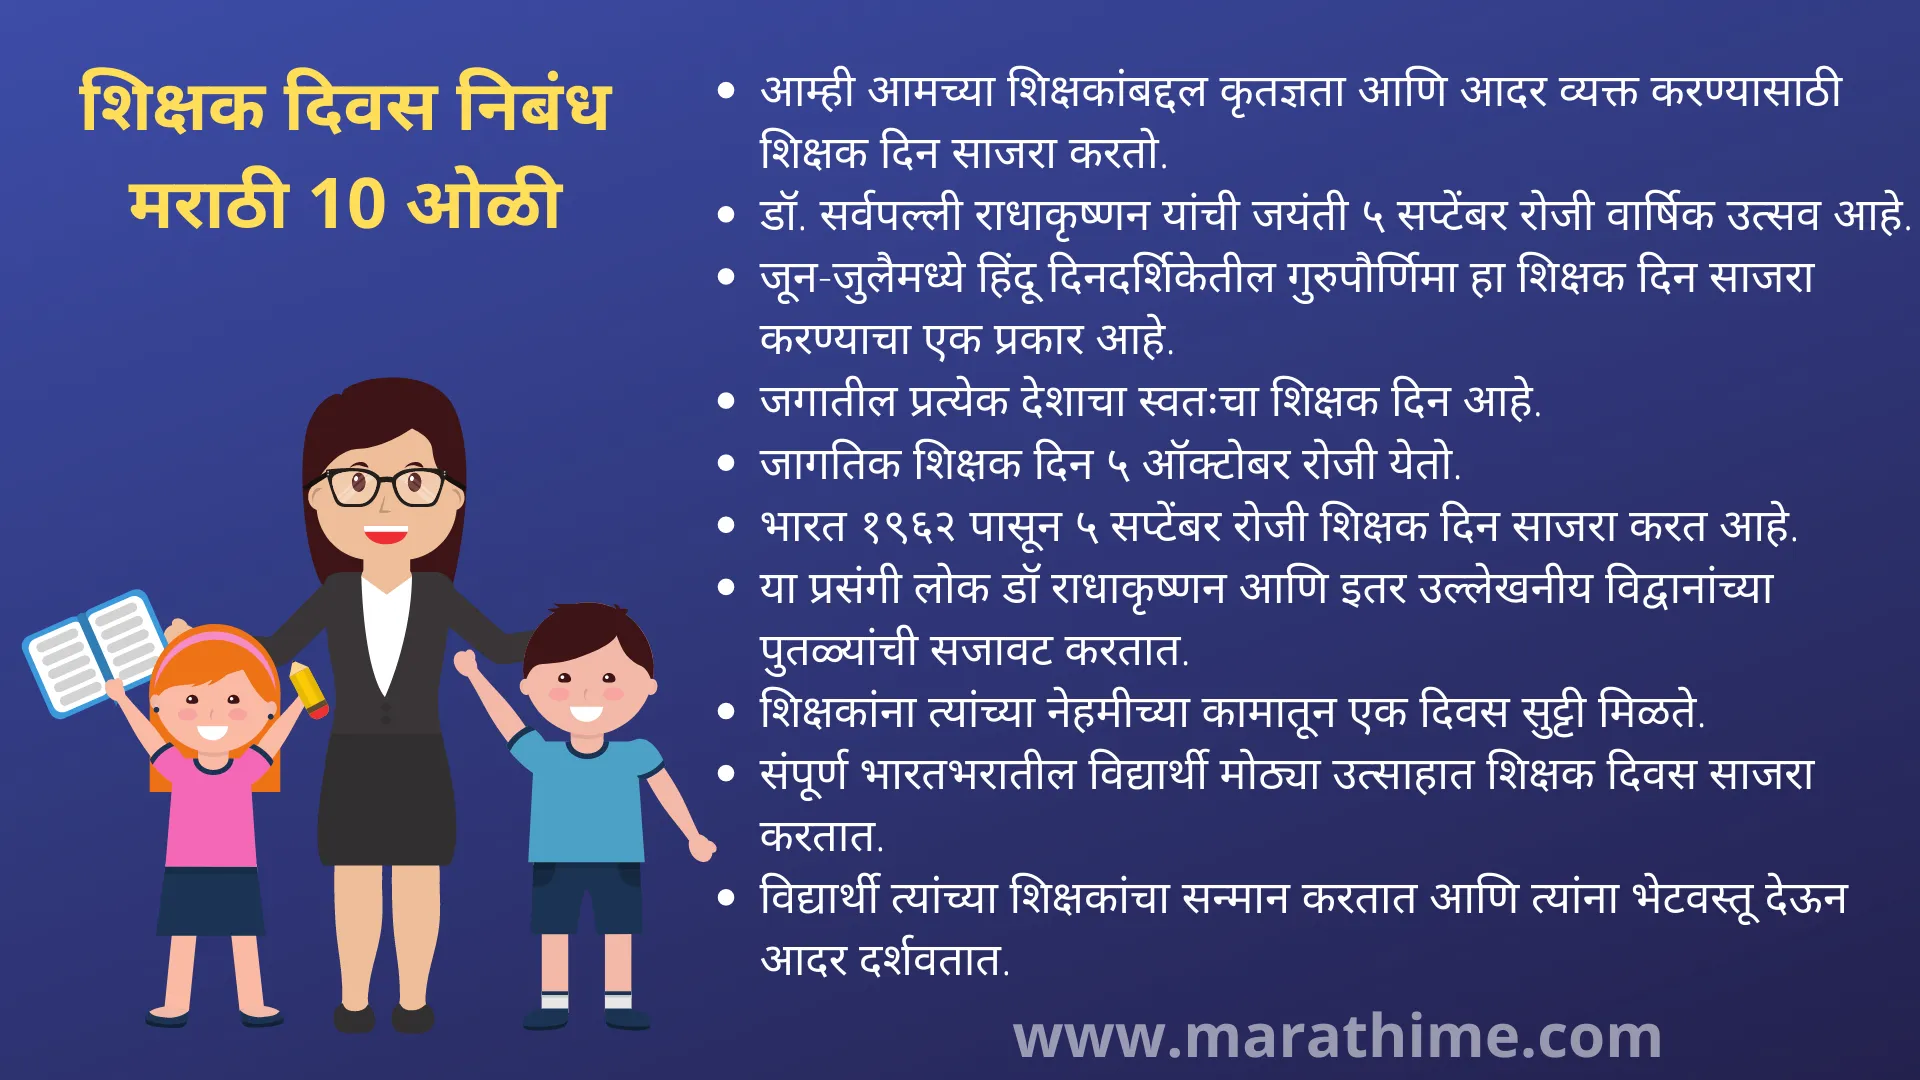 शिक्षक दिवस निबंध मराठी 10 ओळी-Teacher Day Short Speech in Marathi-10 Lines on Teachers Day in Marathi 2